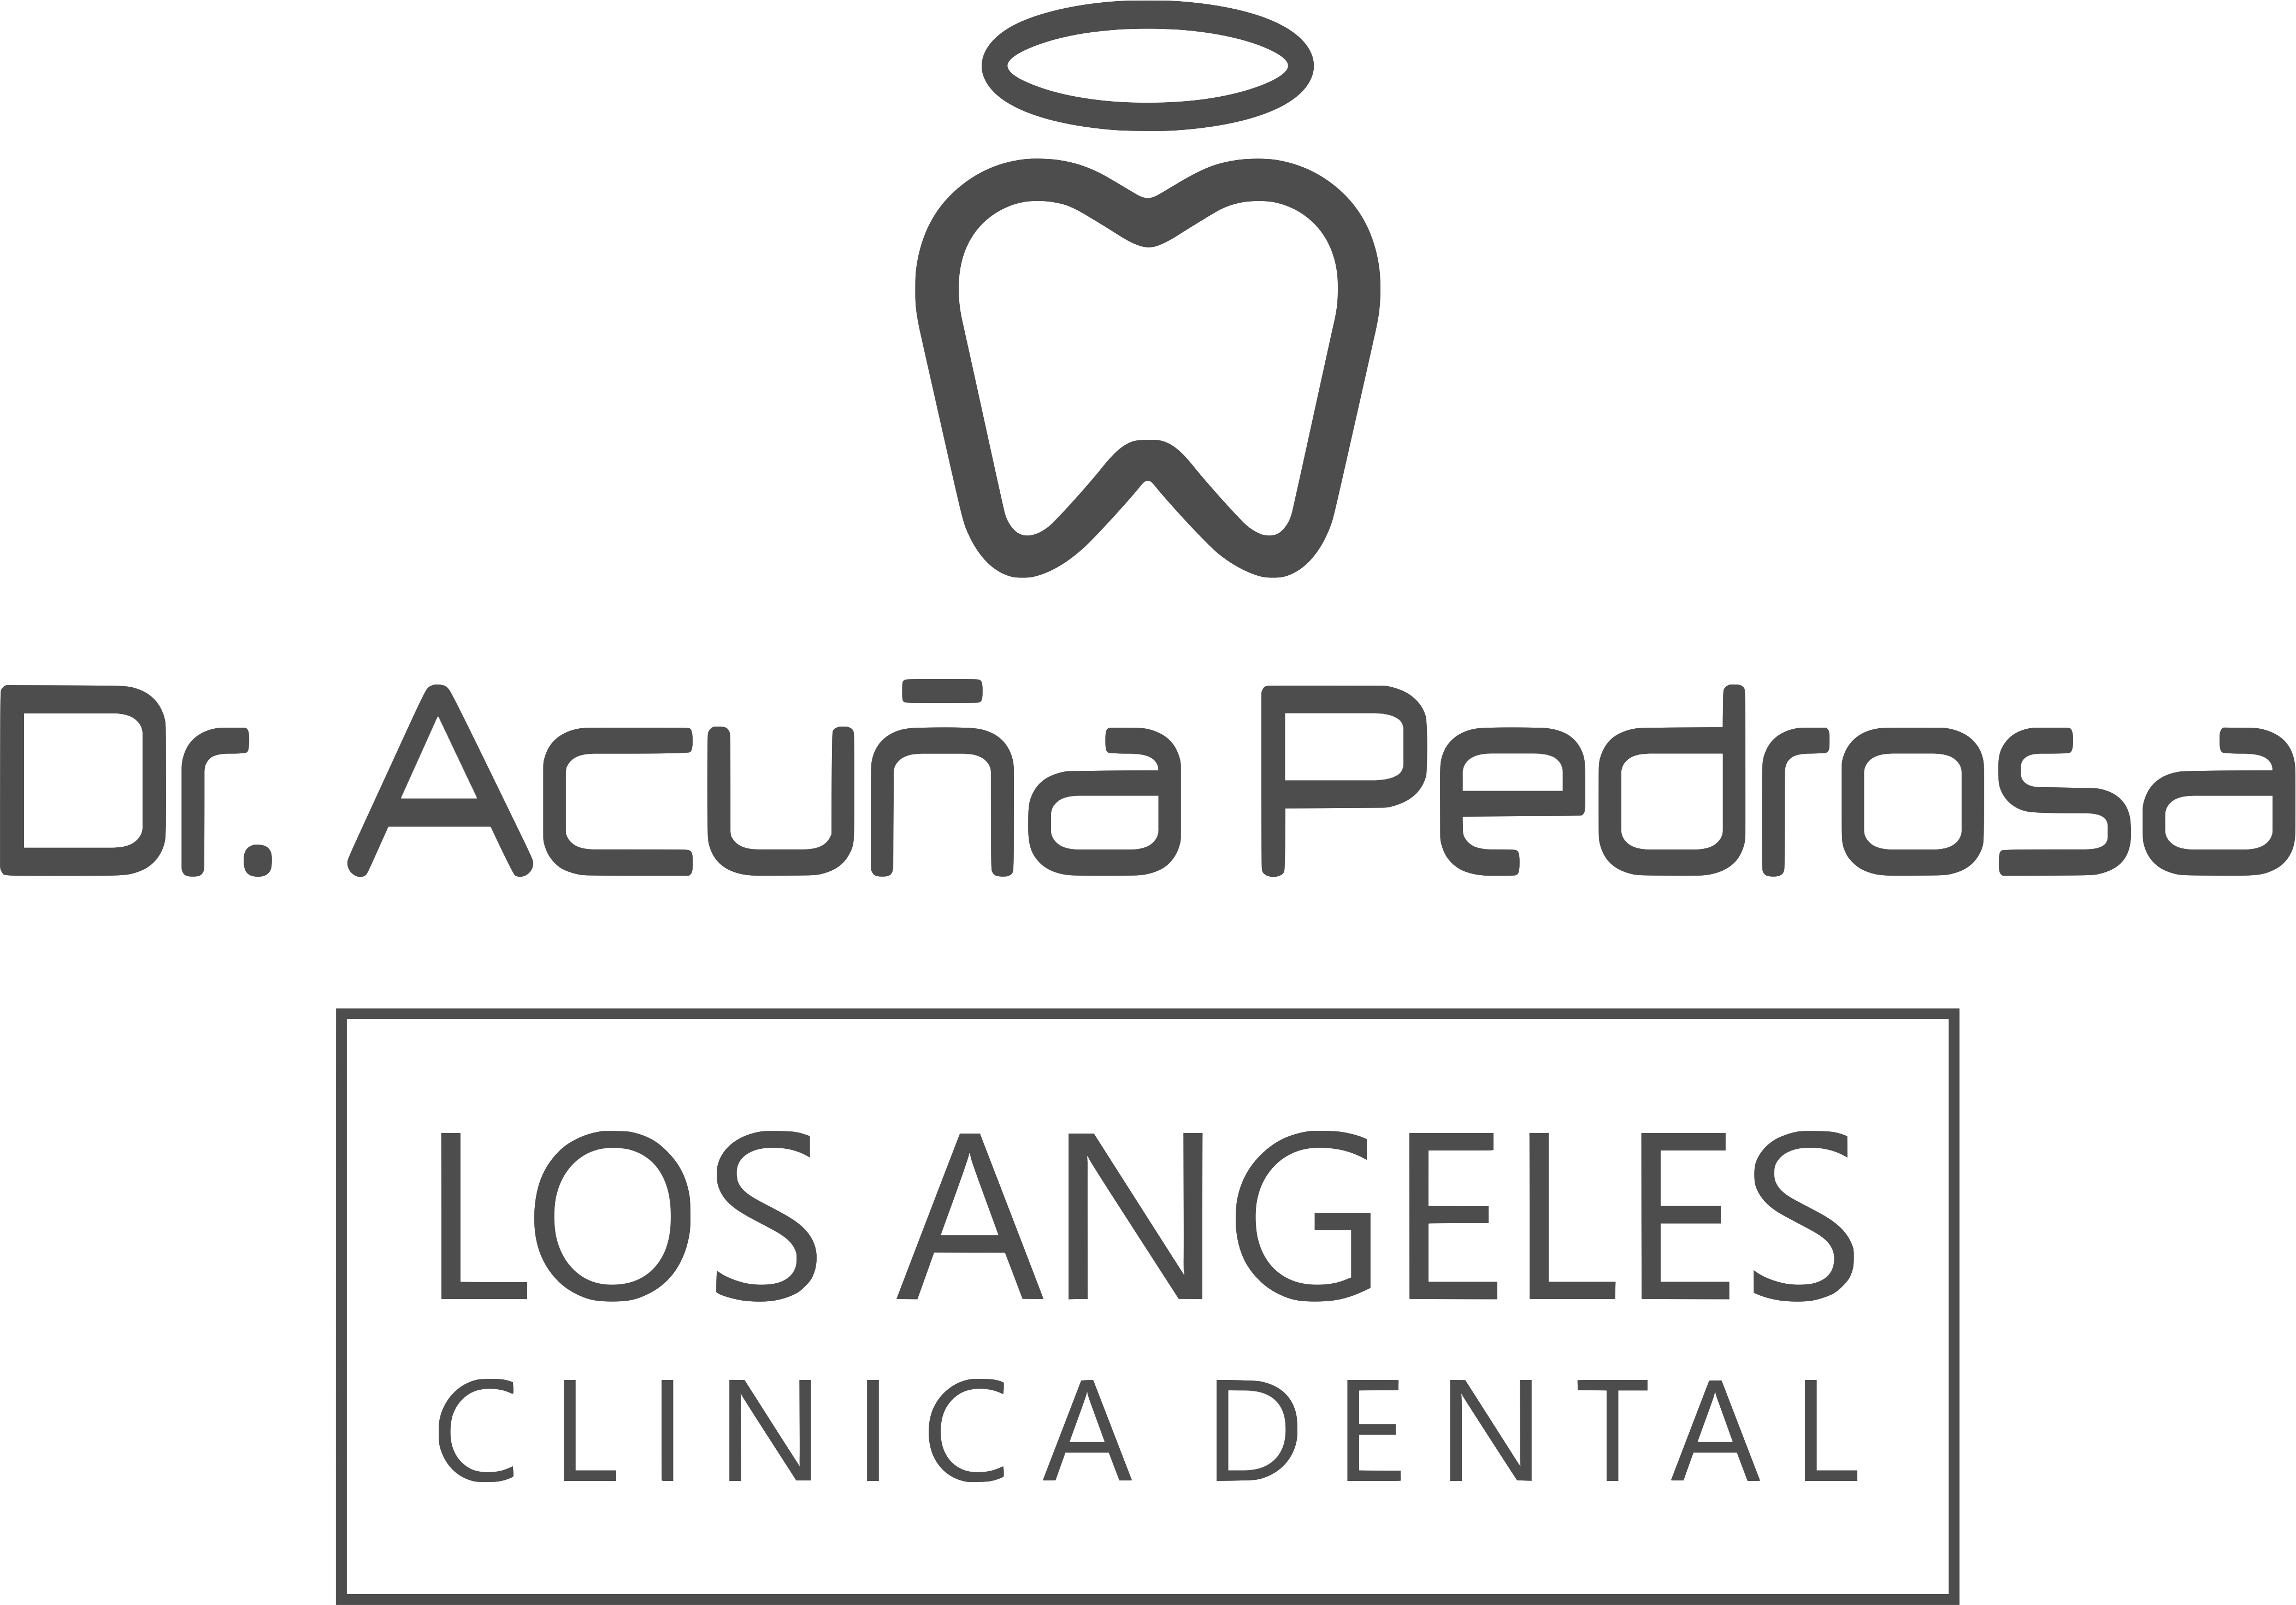 Clínica Dental Los Ángeles - Dr. Acuña Pedrosa